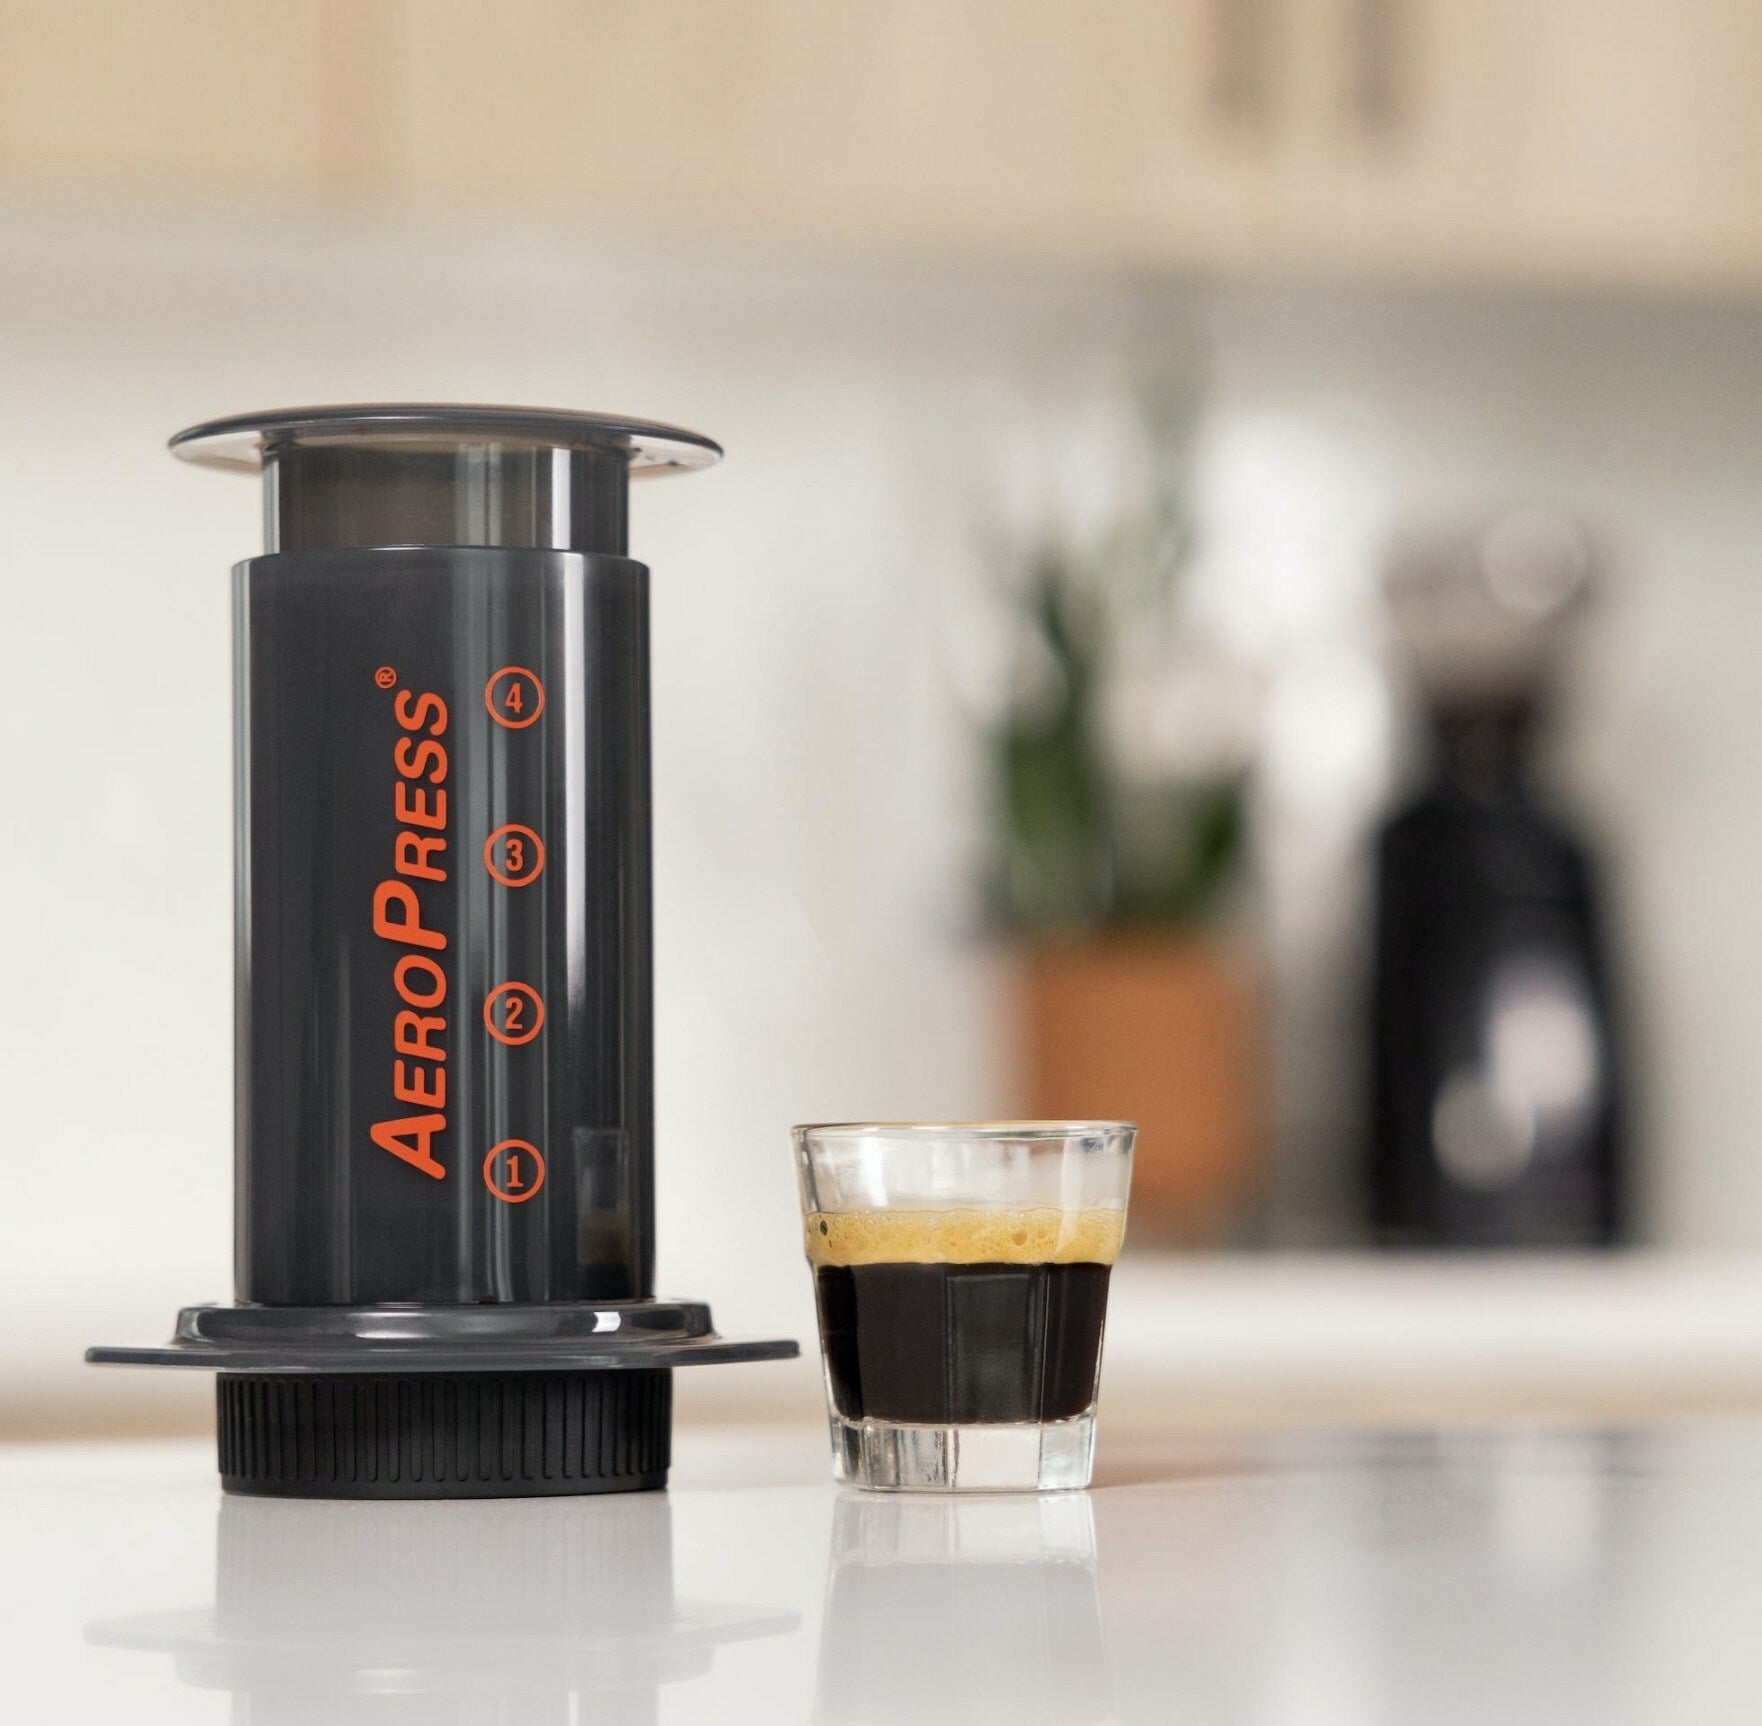 Micro-filtros AeroPress 350 – Alborada Coffee